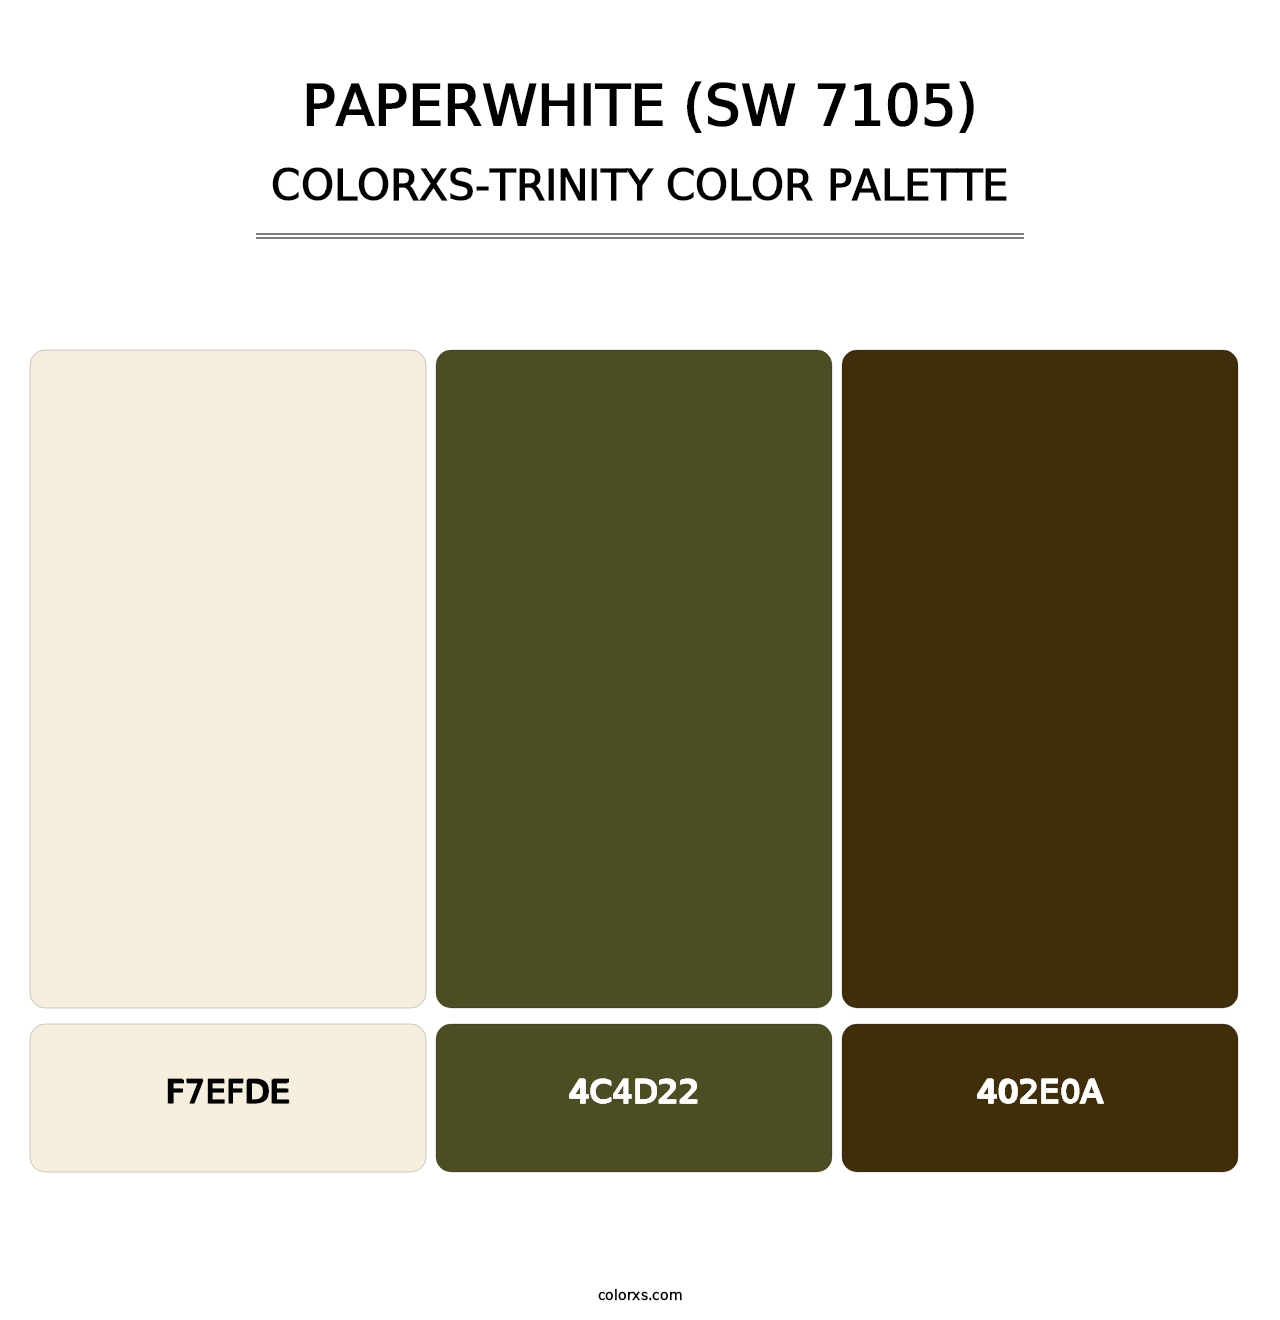 Paperwhite (SW 7105) - Colorxs Trinity Palette